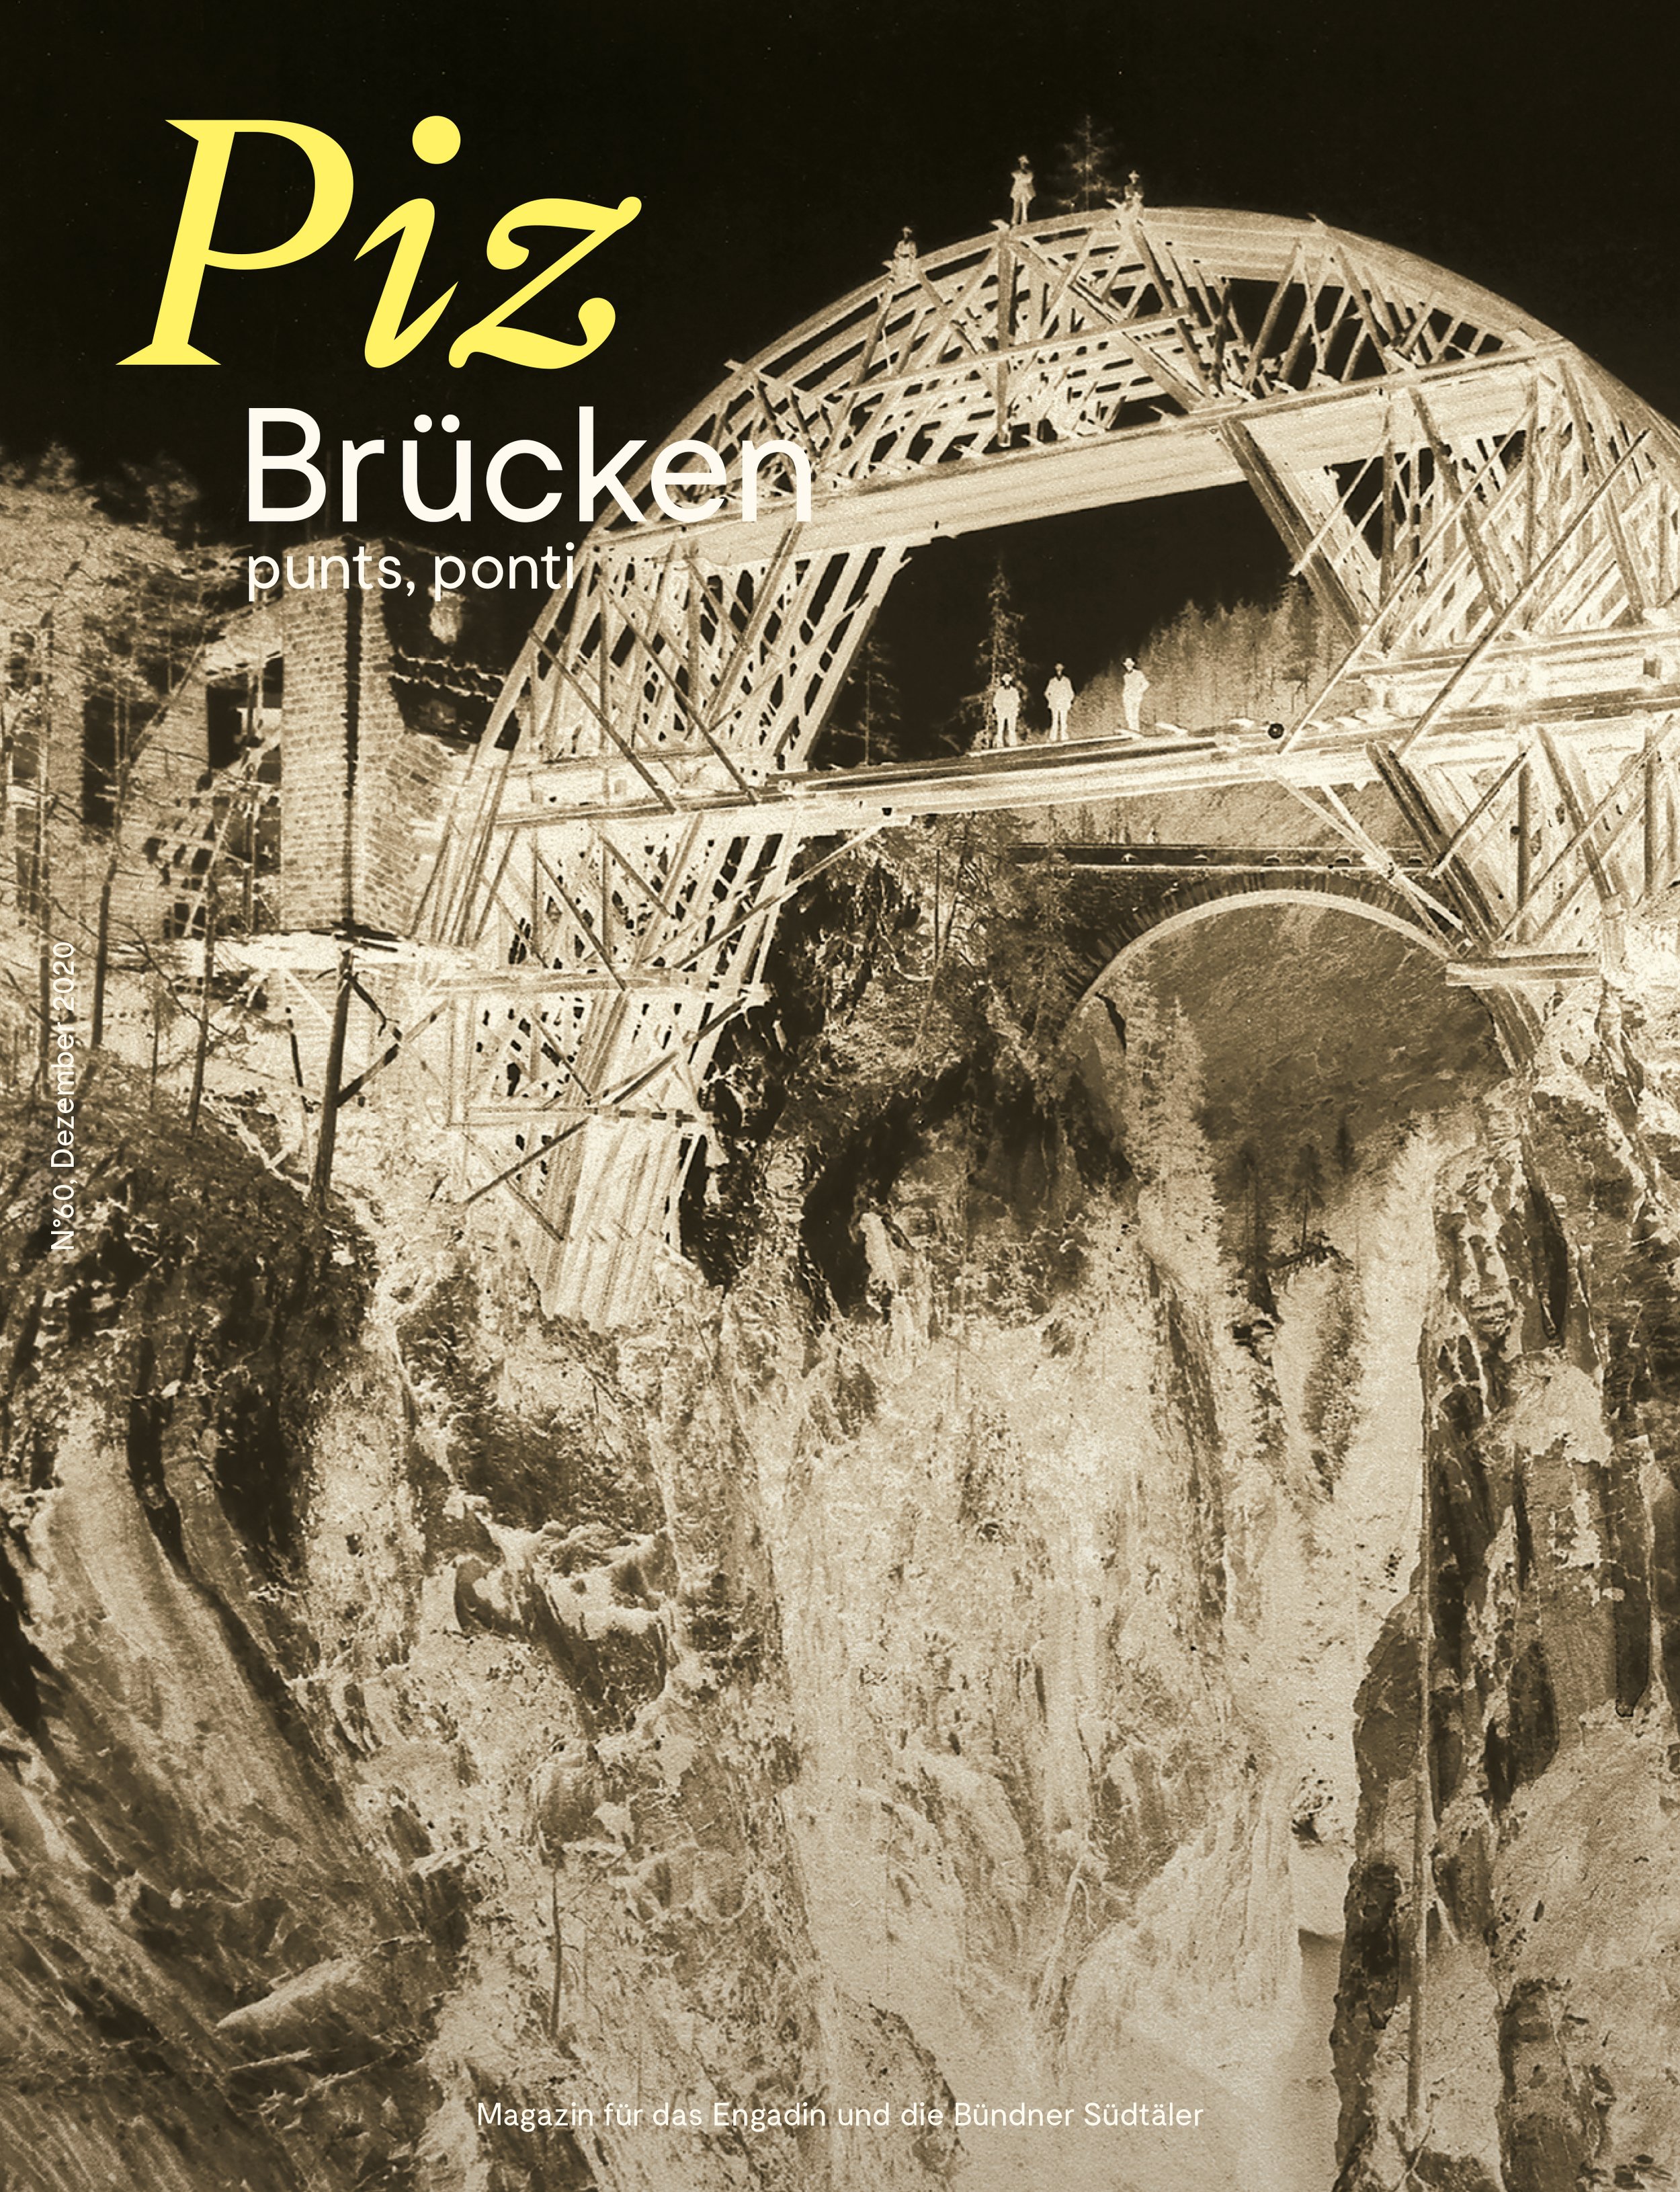 piz60_Brucken-cover.jpg